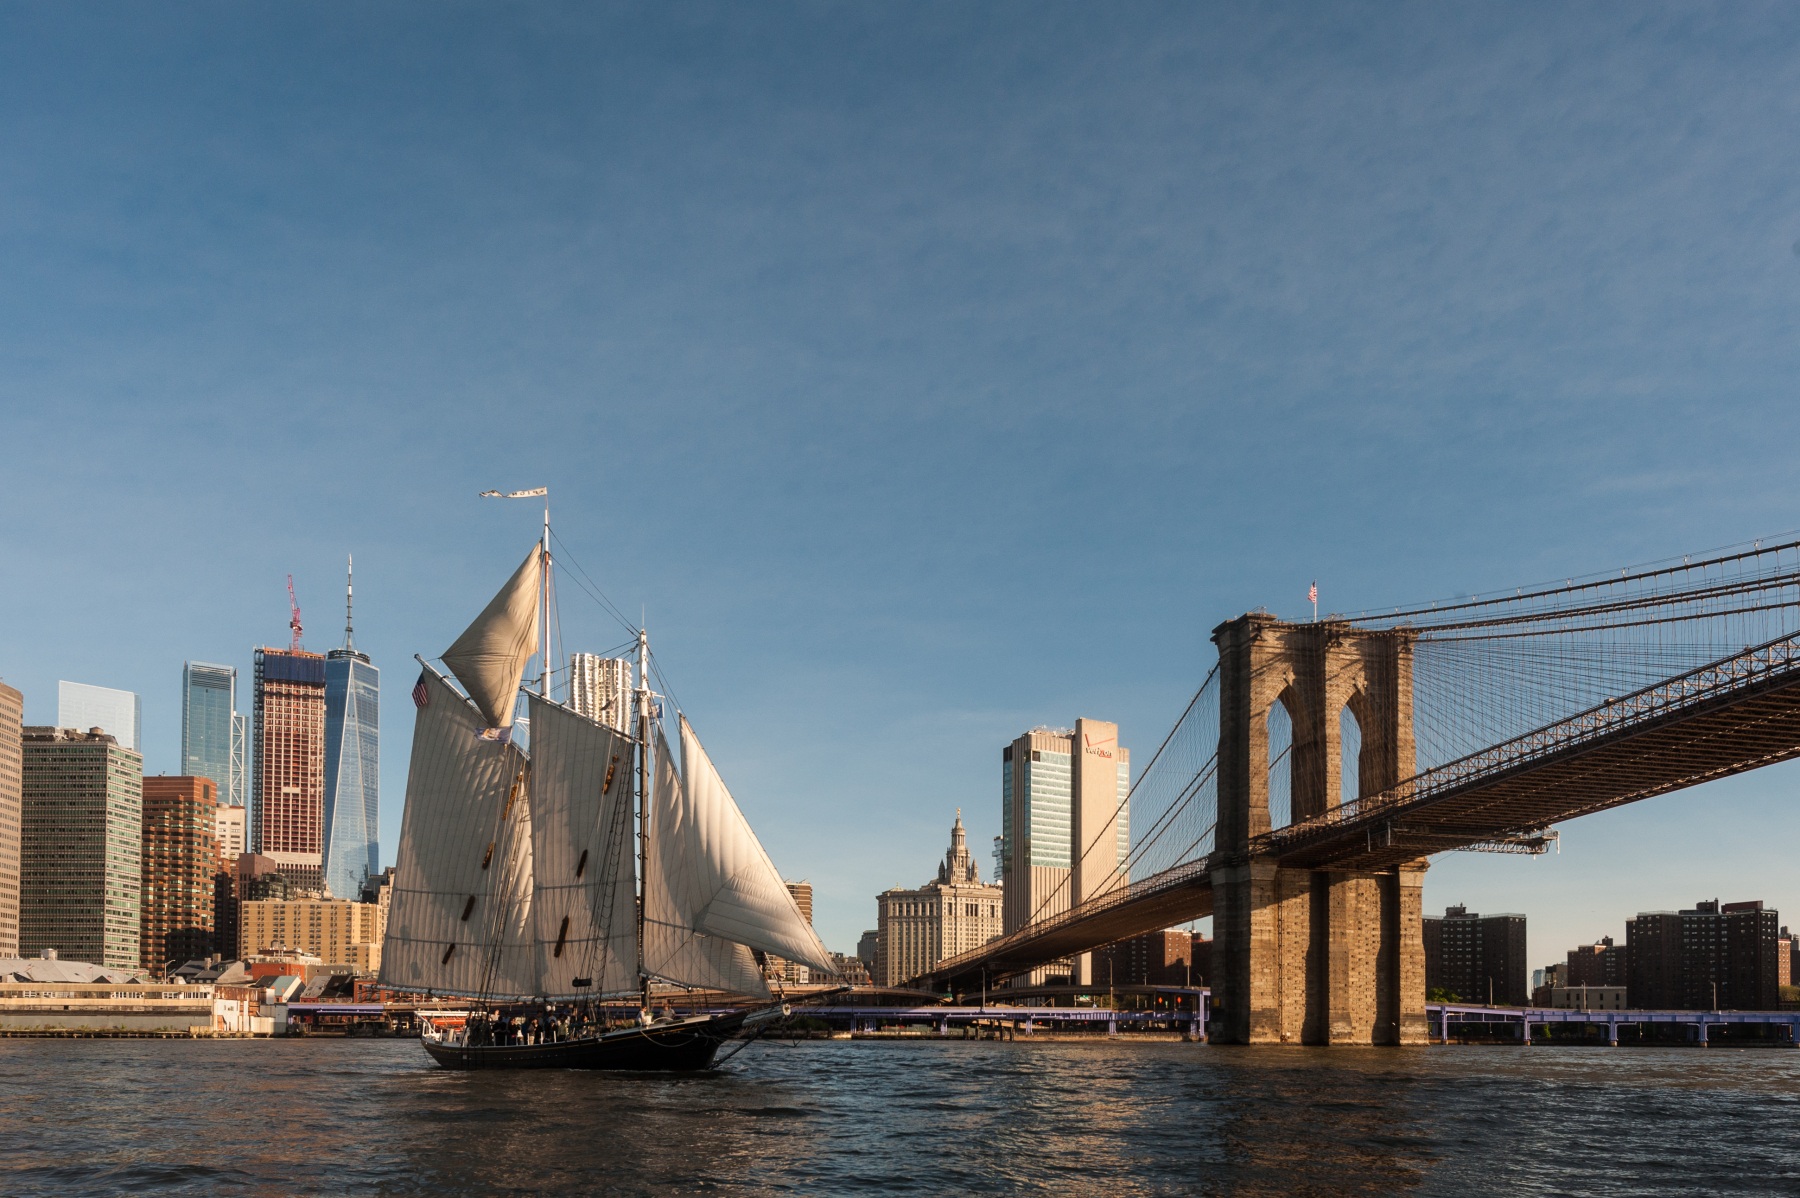 Historic schooner Pioneer sails past the Brooklyn Bridge